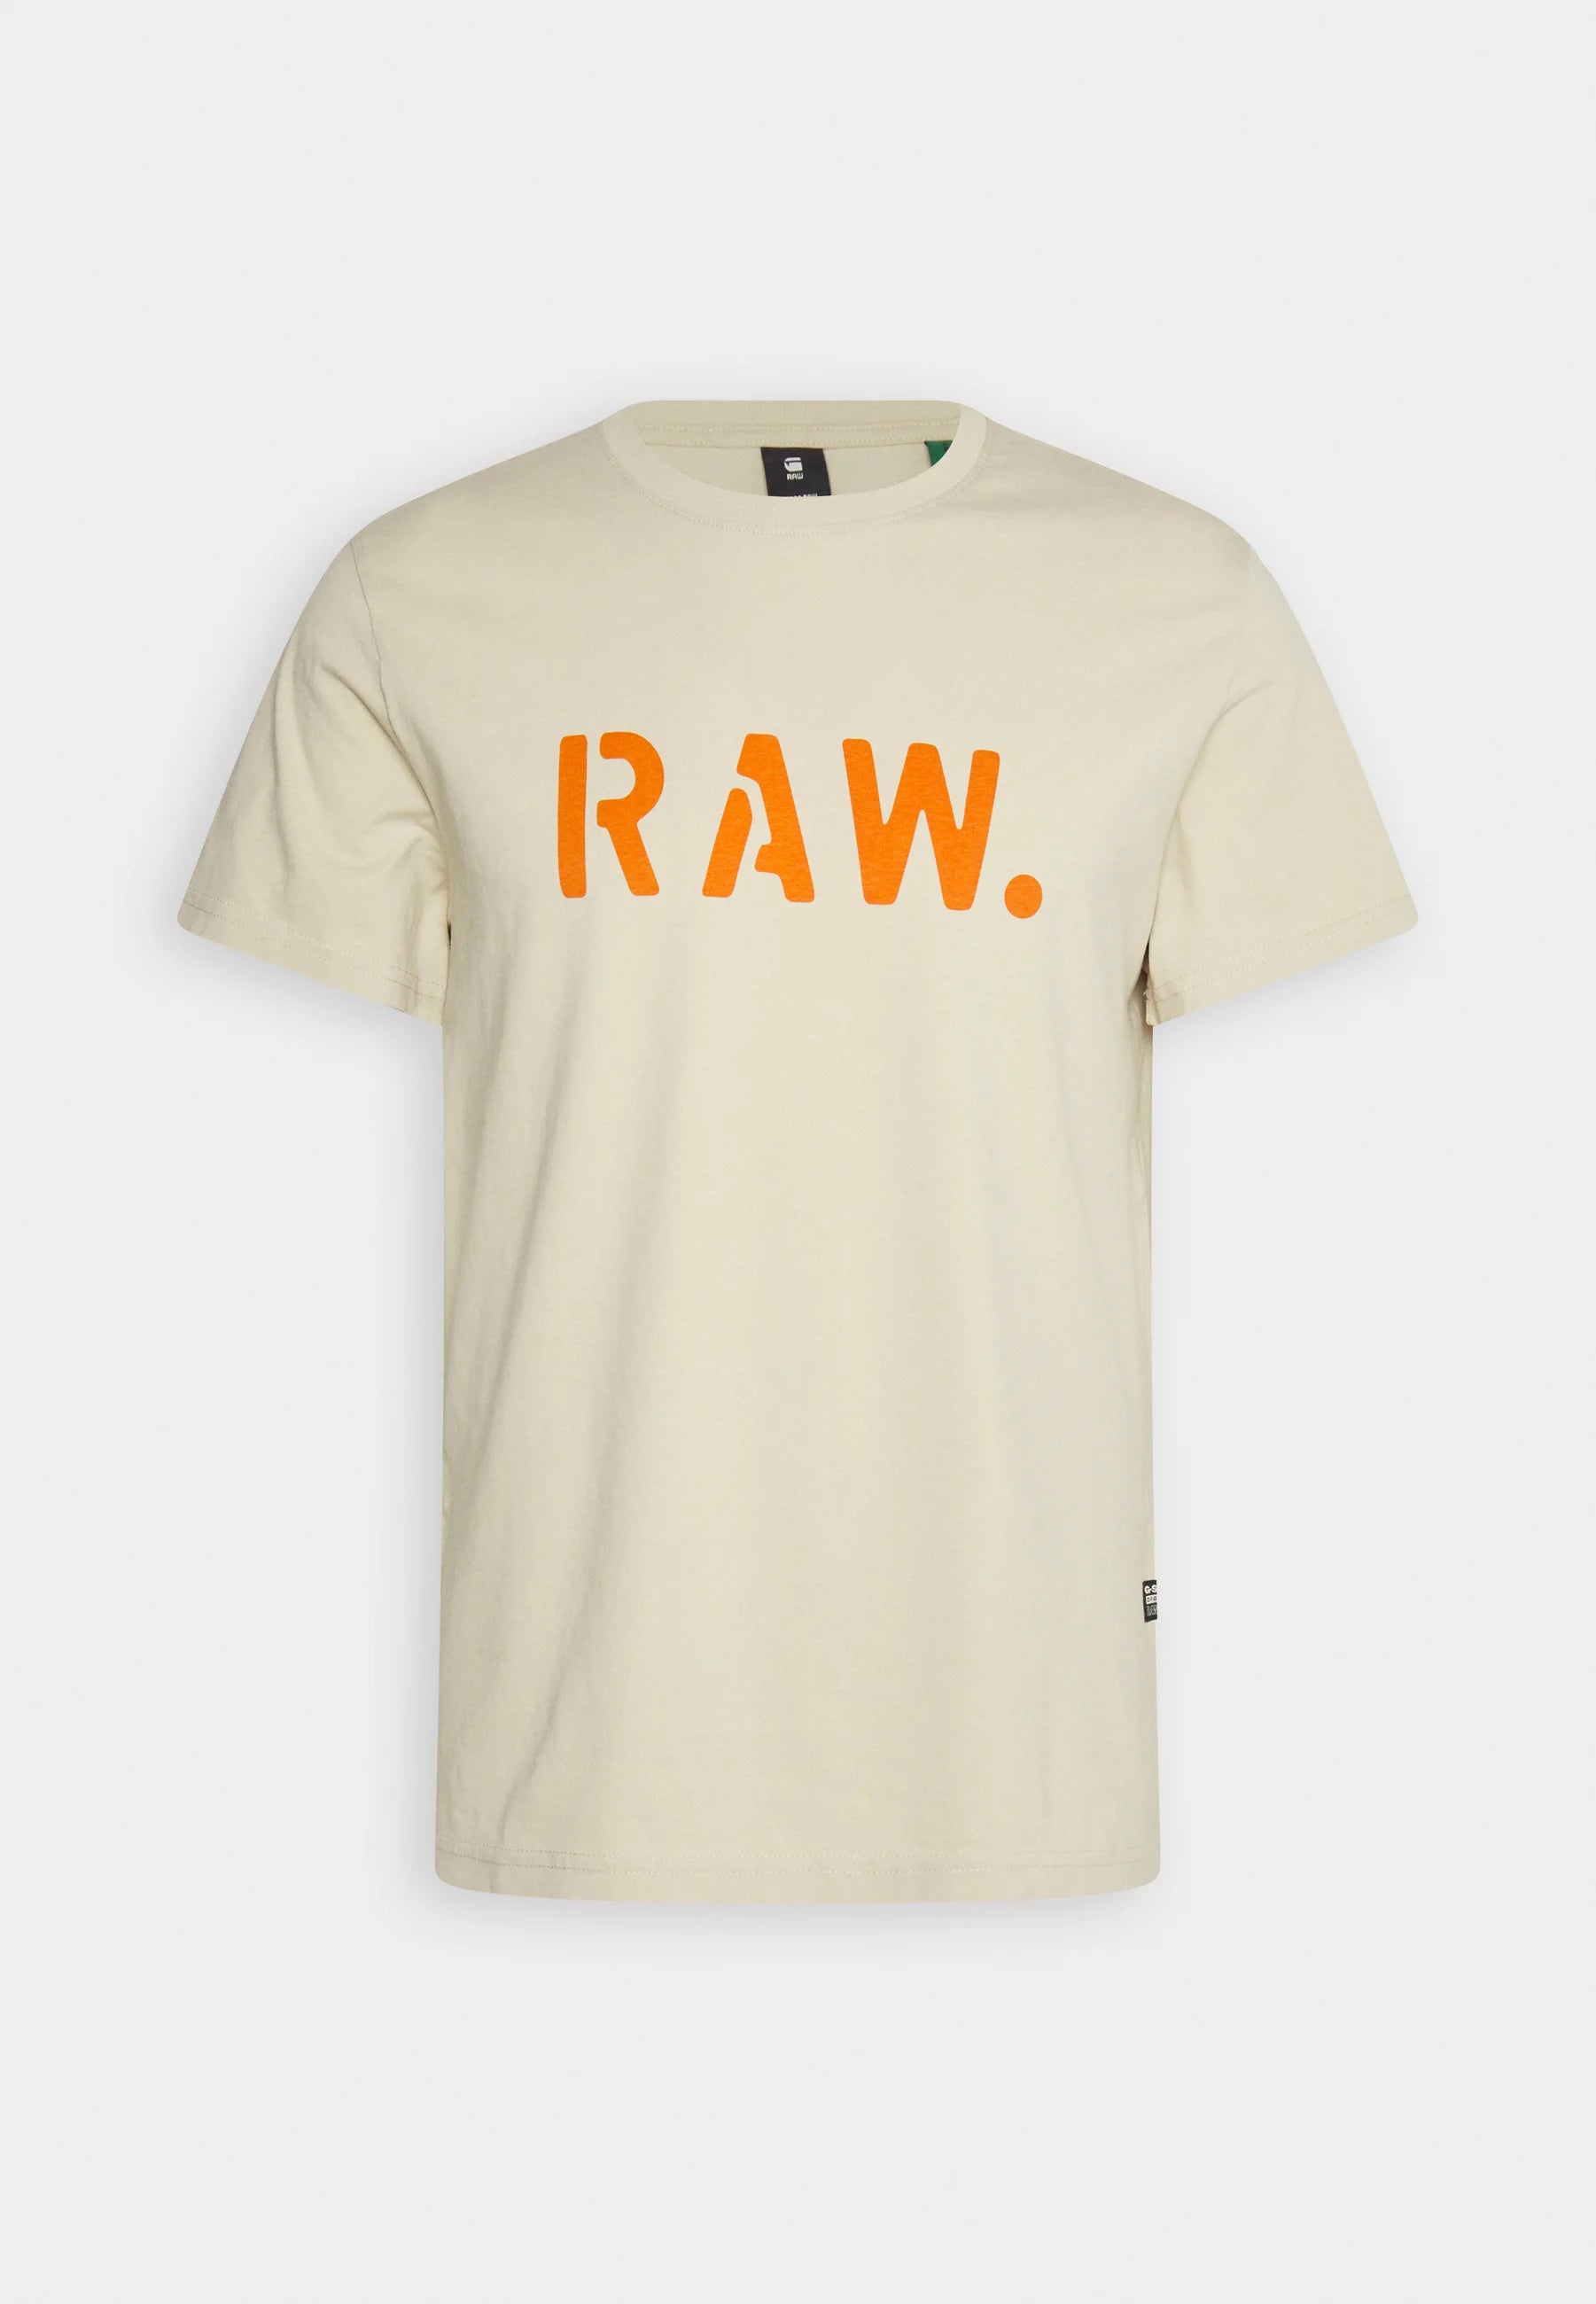 G-Star STENCIL RAW - T-shirt imprimé RAW